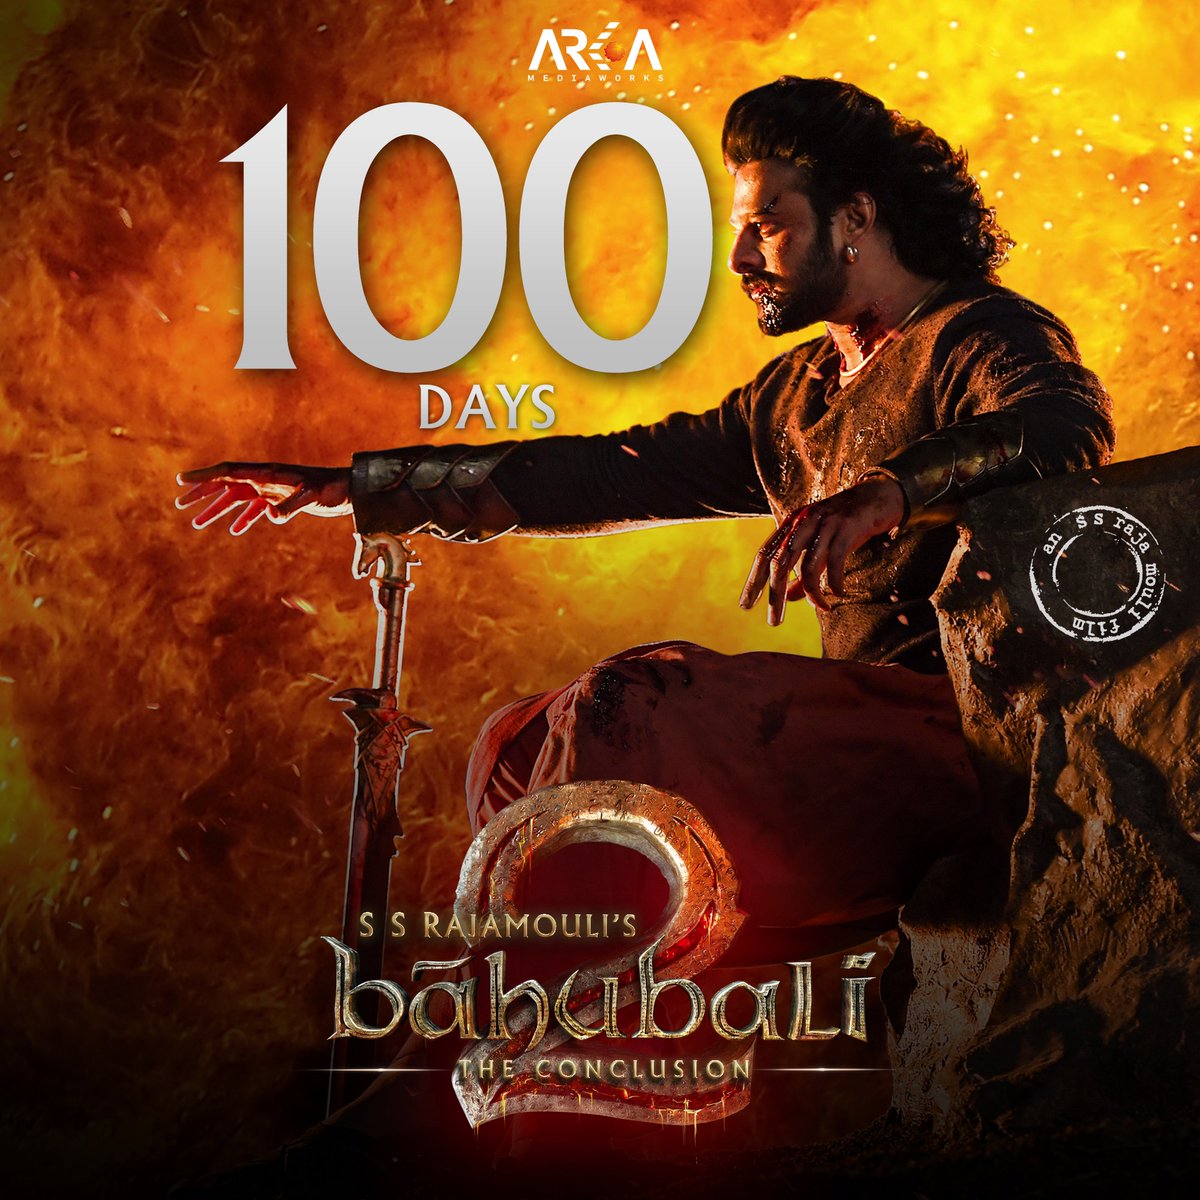 Bahubali 2 completes 100 days in cinemas